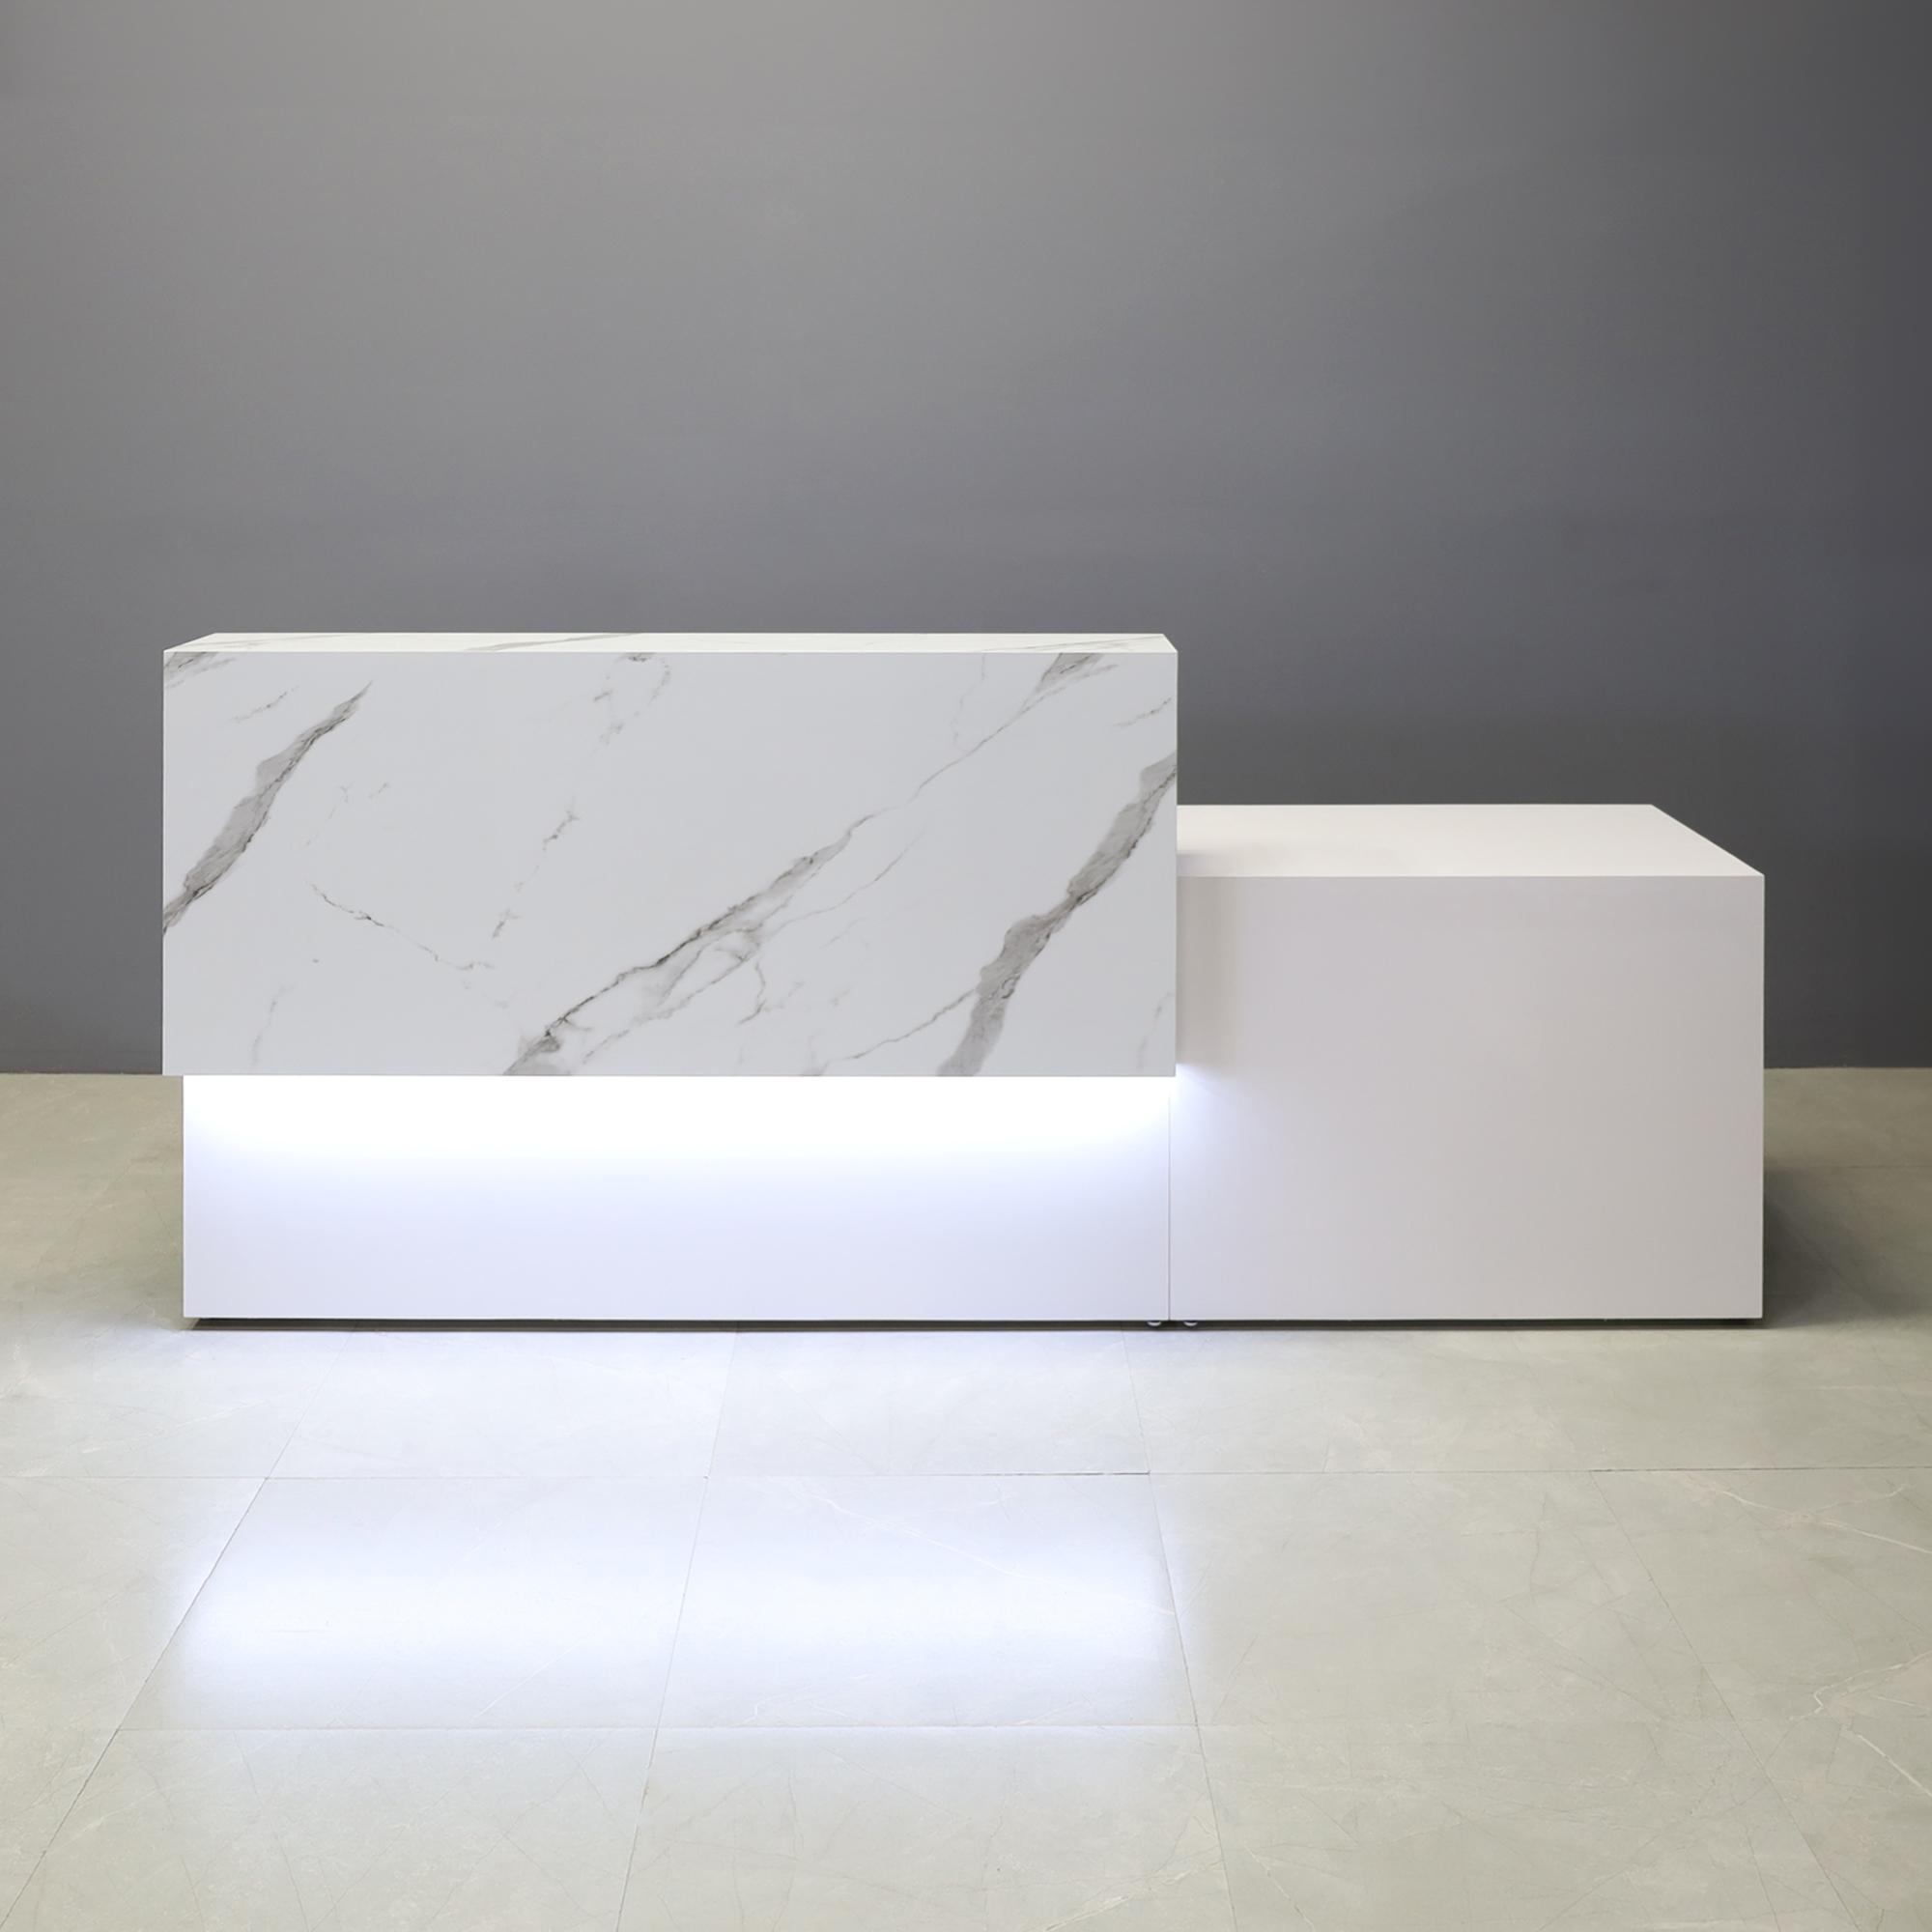 Los Angeles Long and ADA Compliant Custom Reception Desk in calcutta stone pvc laminate counter and white matte laminate desk, with warm white LED shown here.